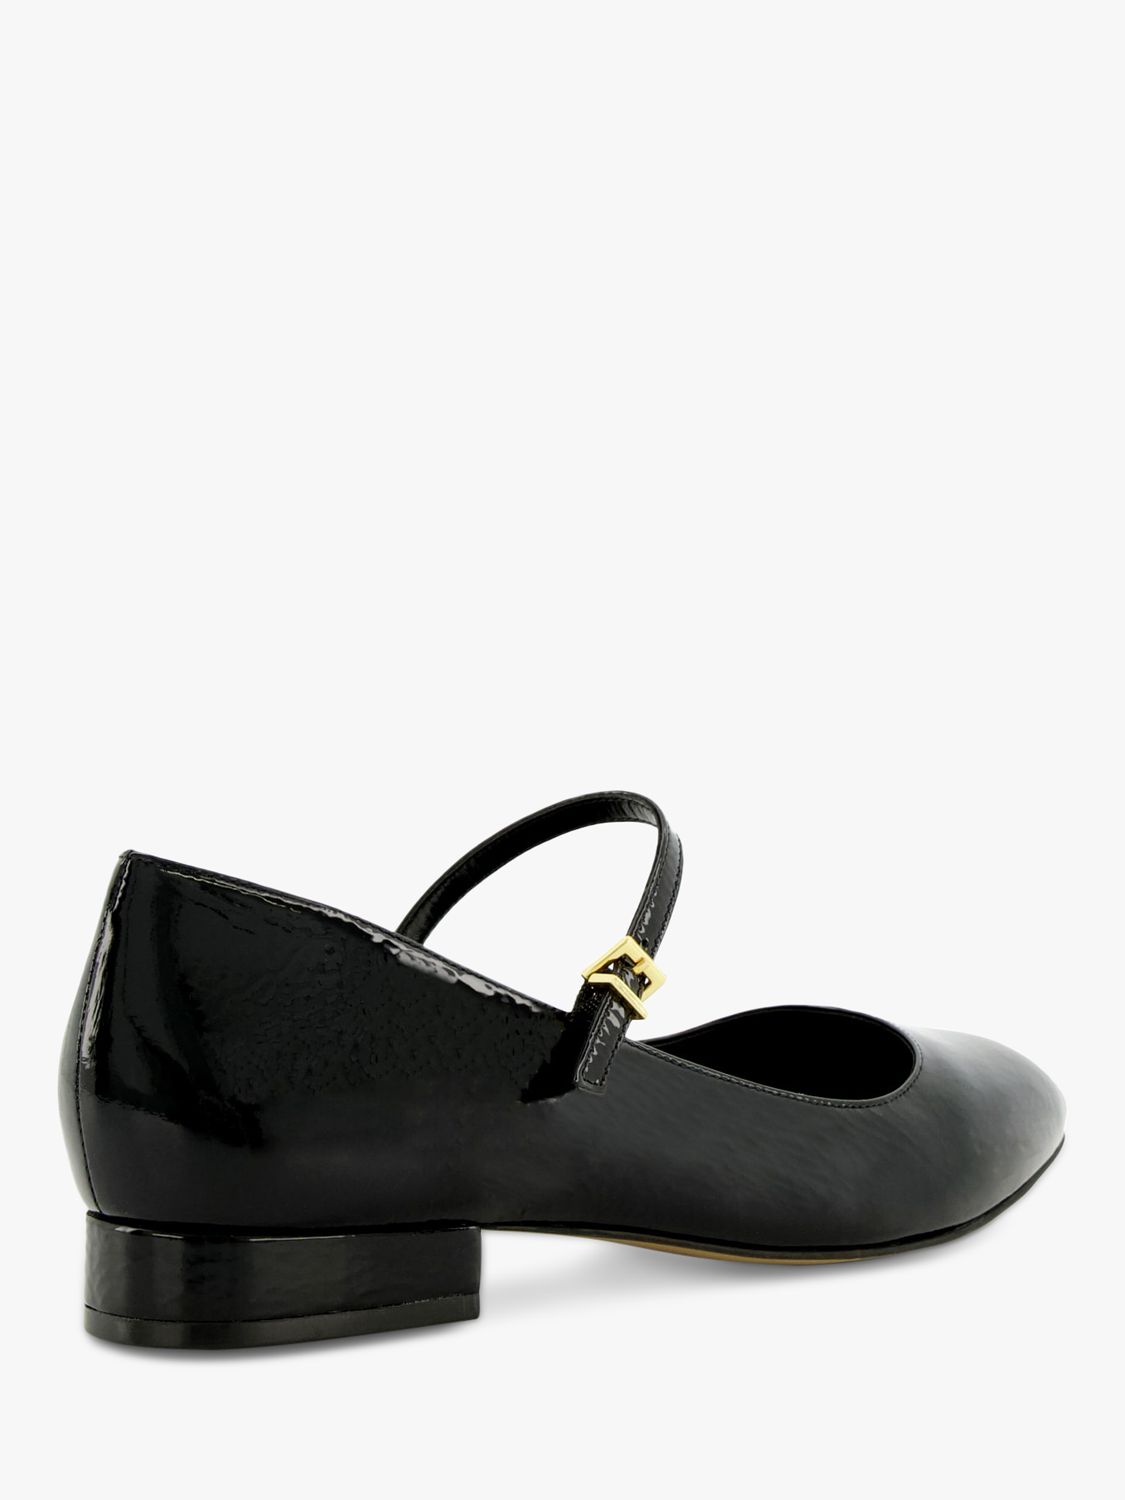 Dune Hipplie Mary Jane Shoes, Black Patent, 4